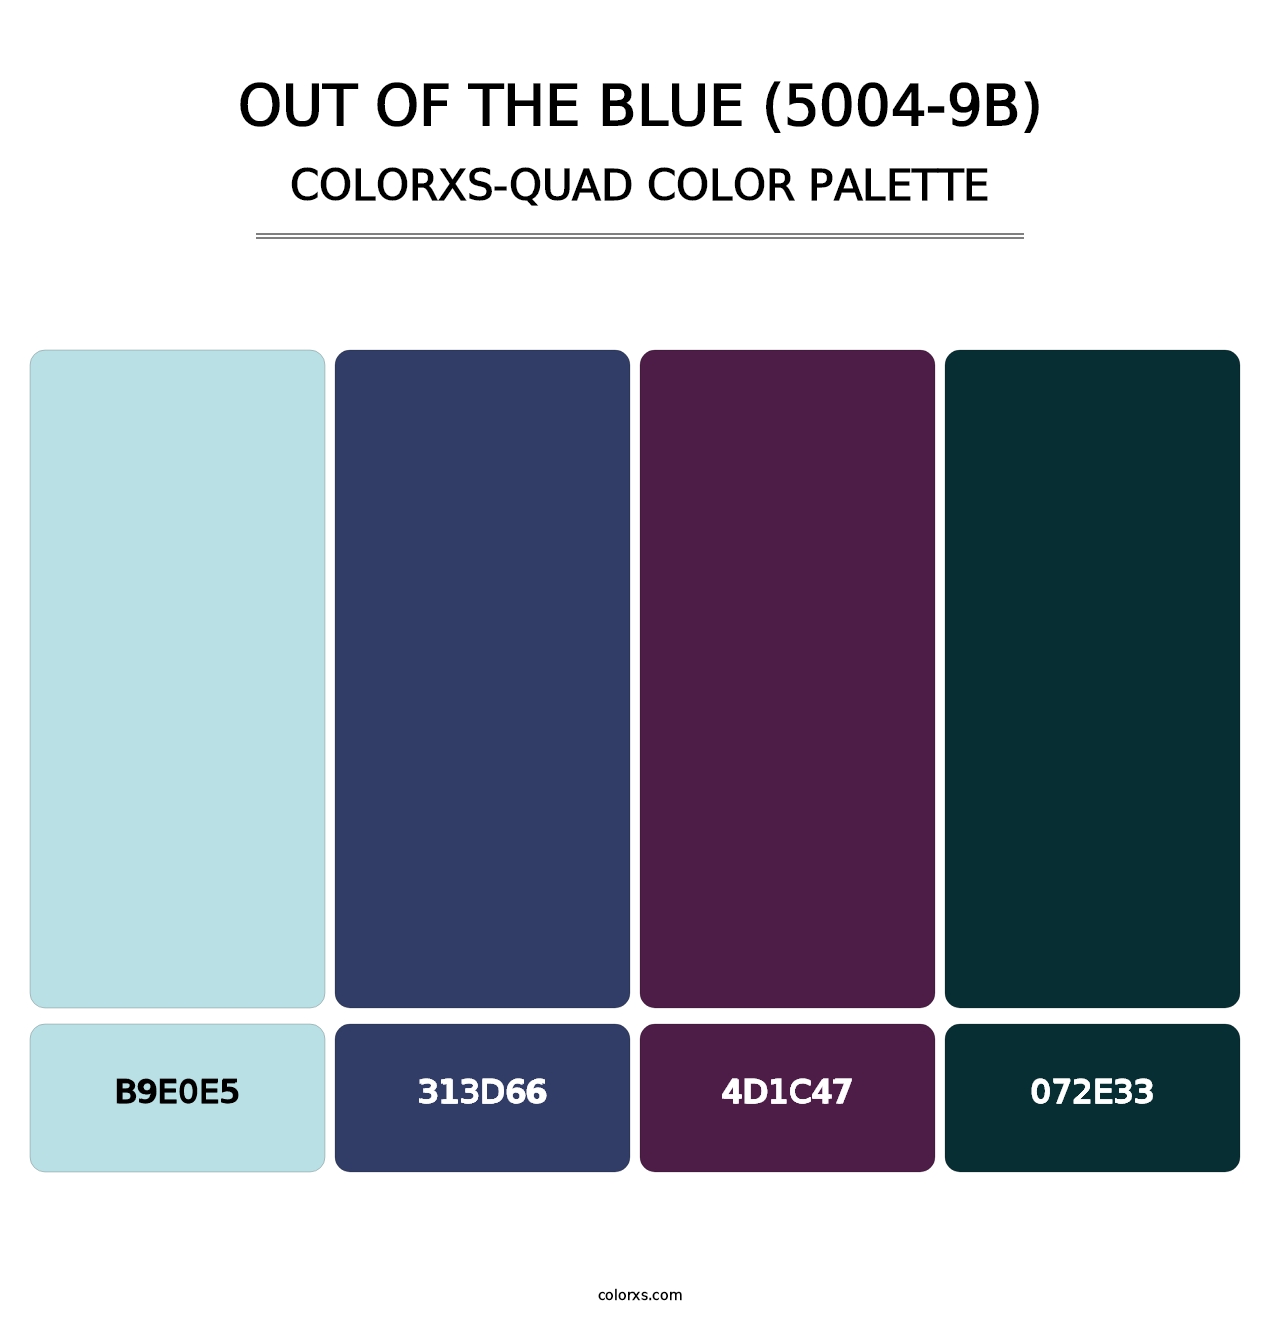 Out of the Blue (5004-9B) - Colorxs Quad Palette